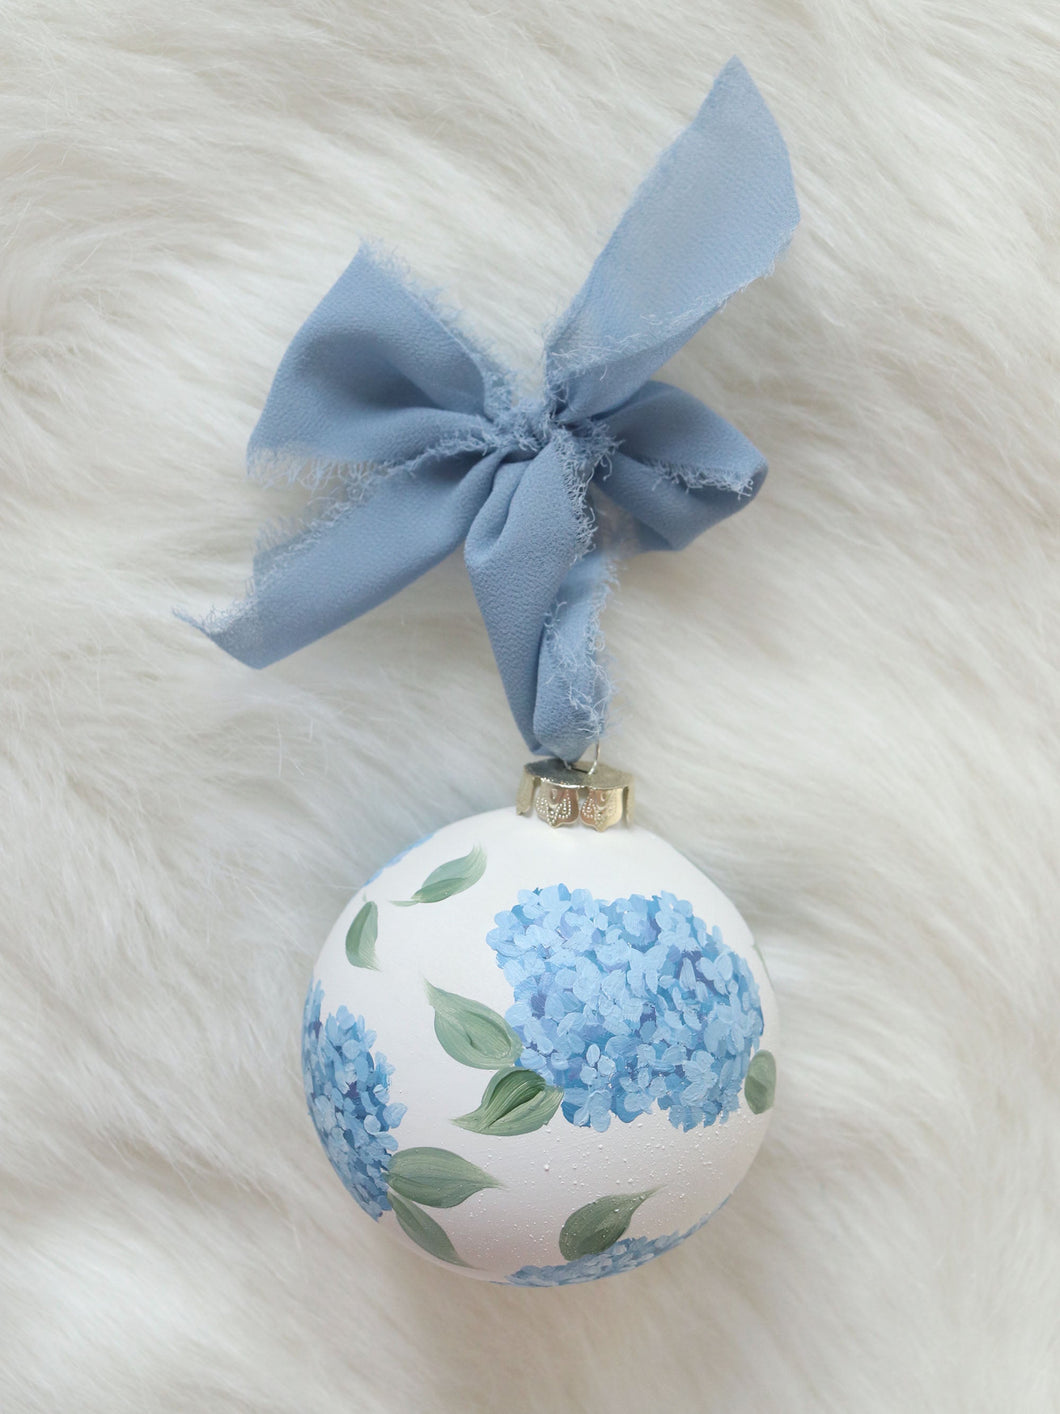 Blue hydrangea hand-painted ornament